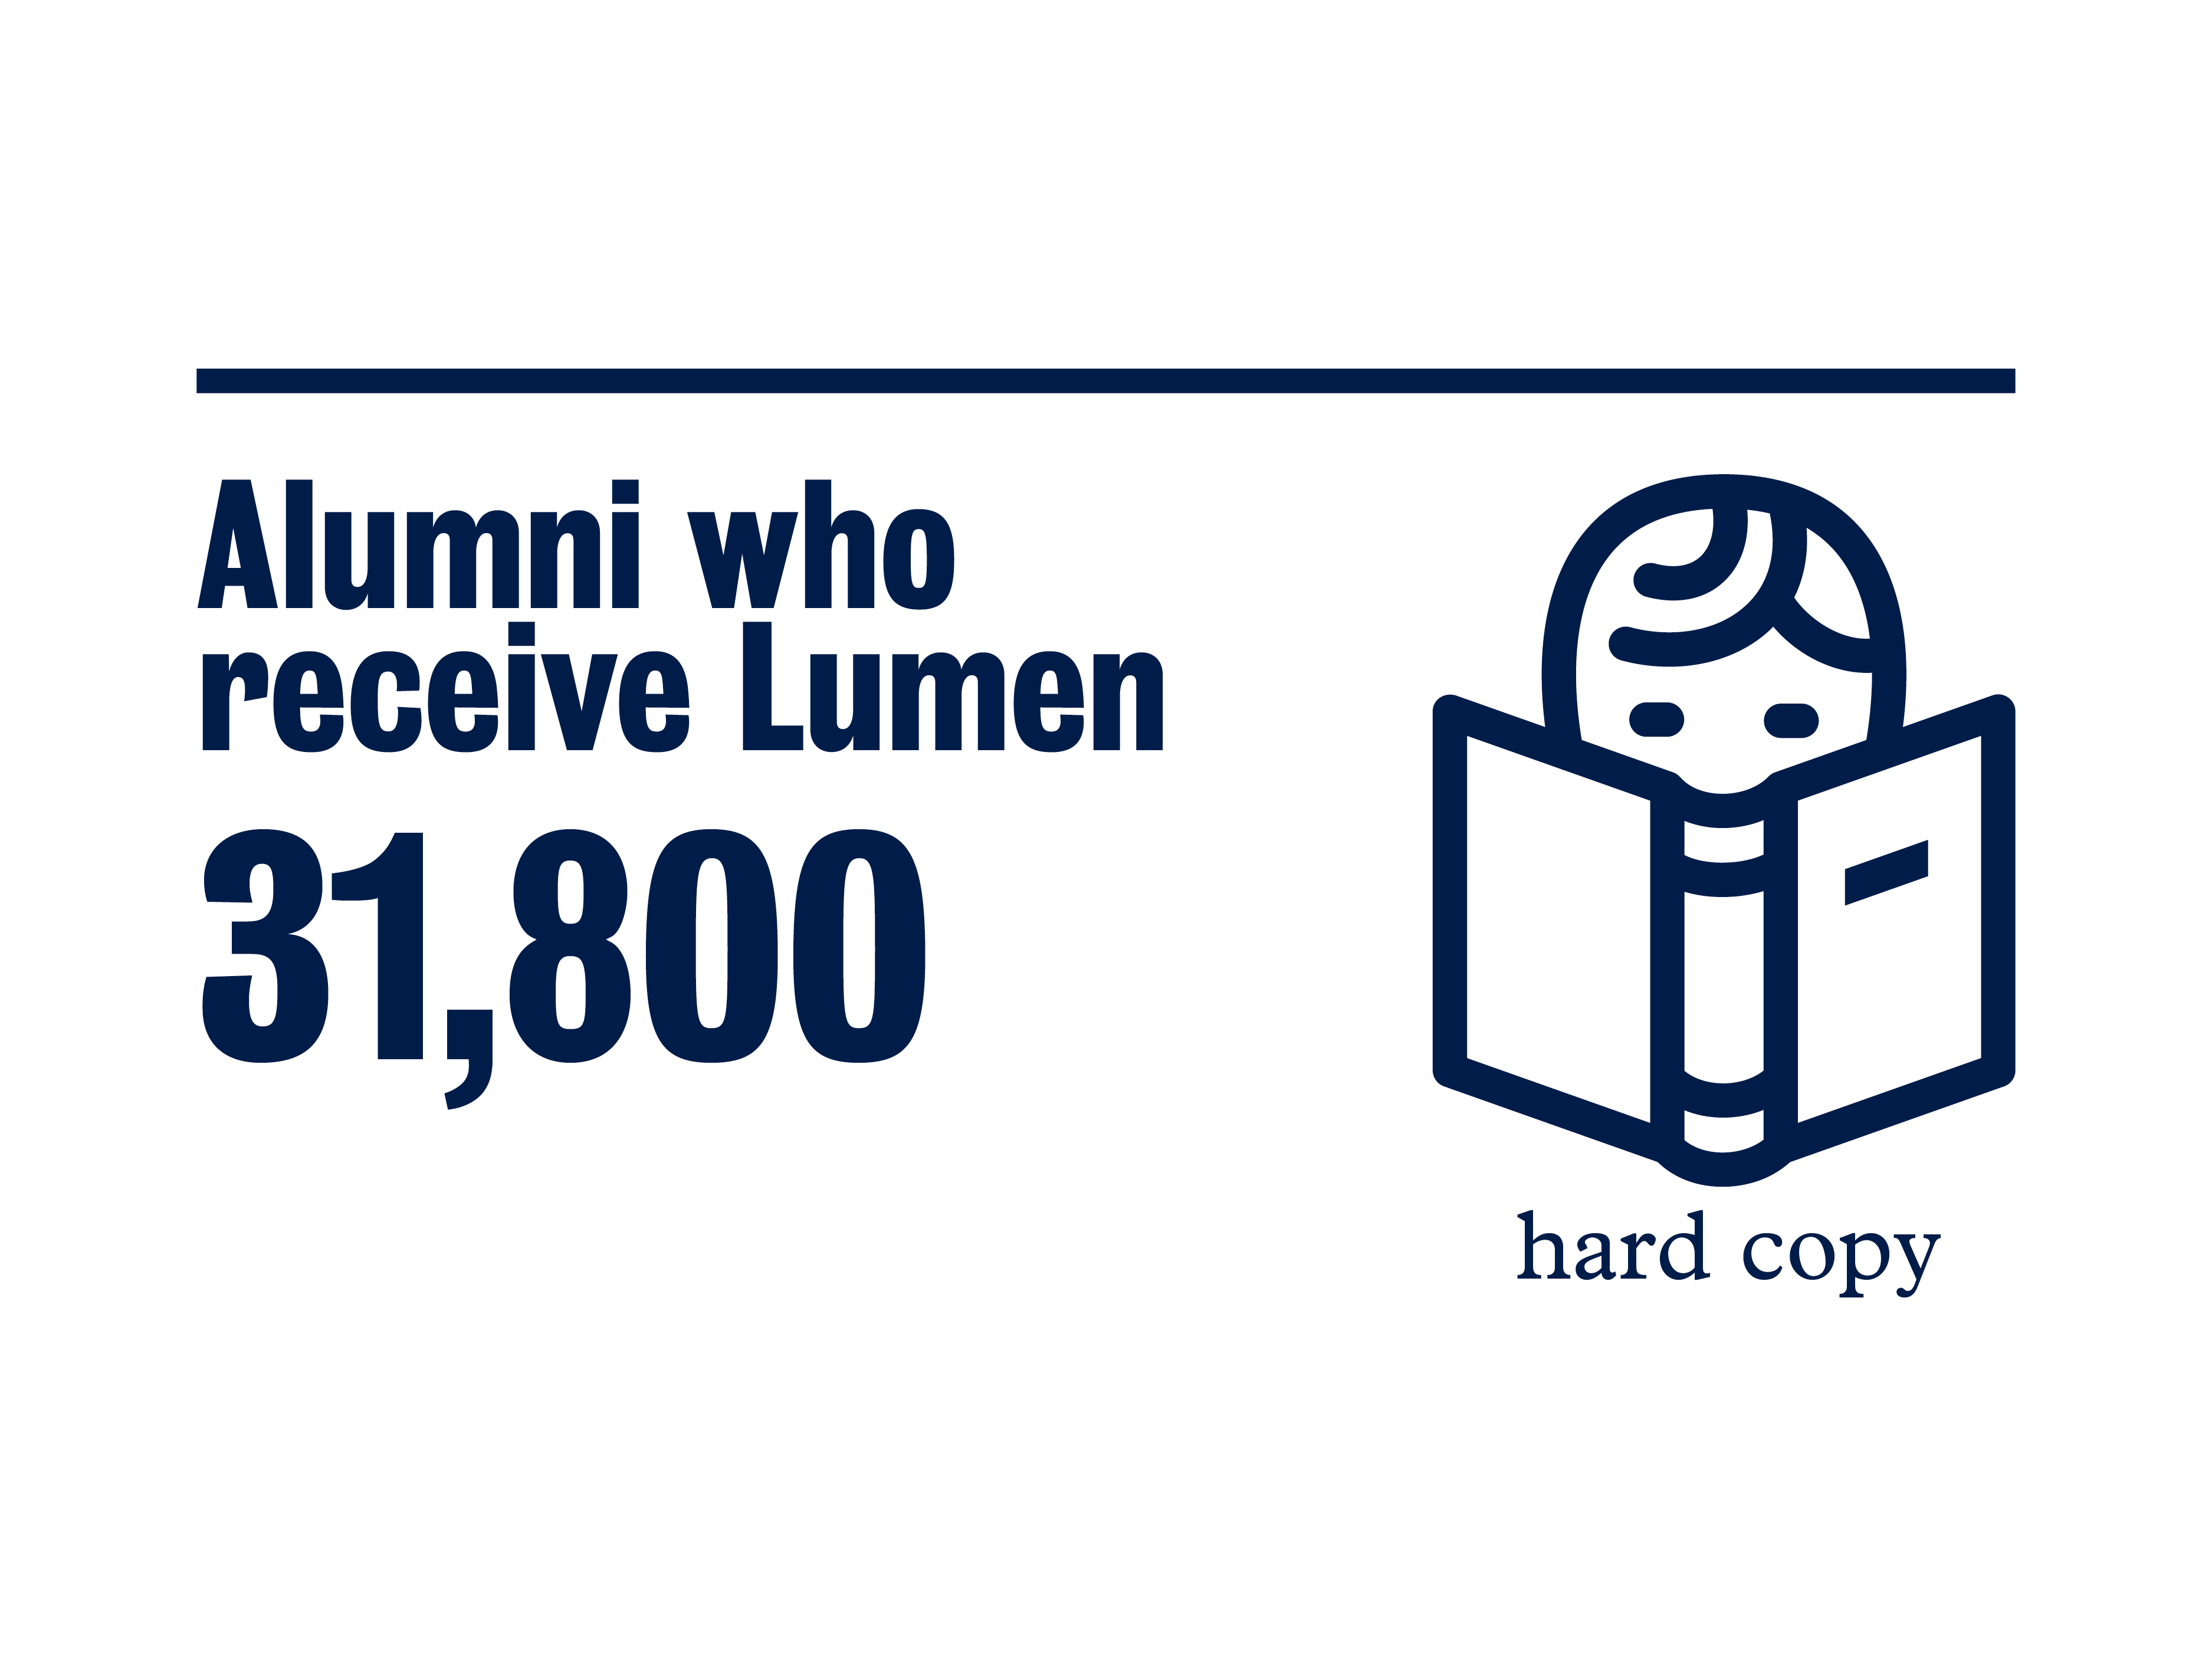 31,800 alumni receive a hard copy of lumen